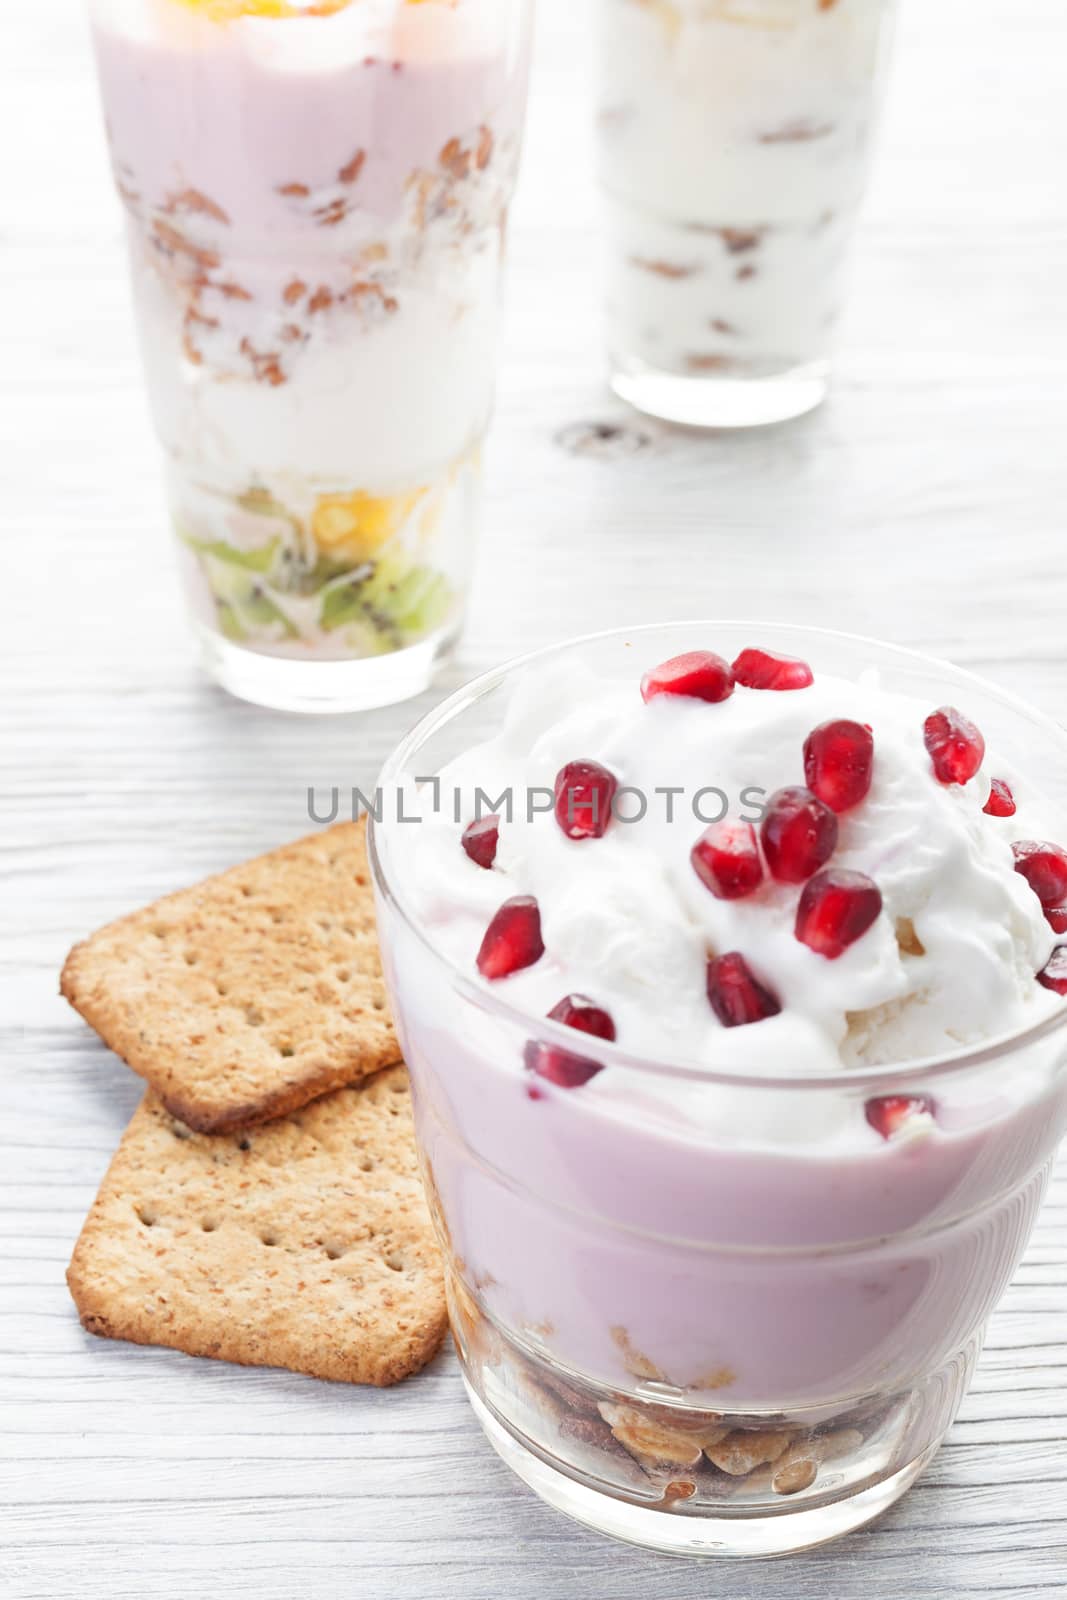 Homemade yogurt meal with fruits, selective focus by igor_stramyk